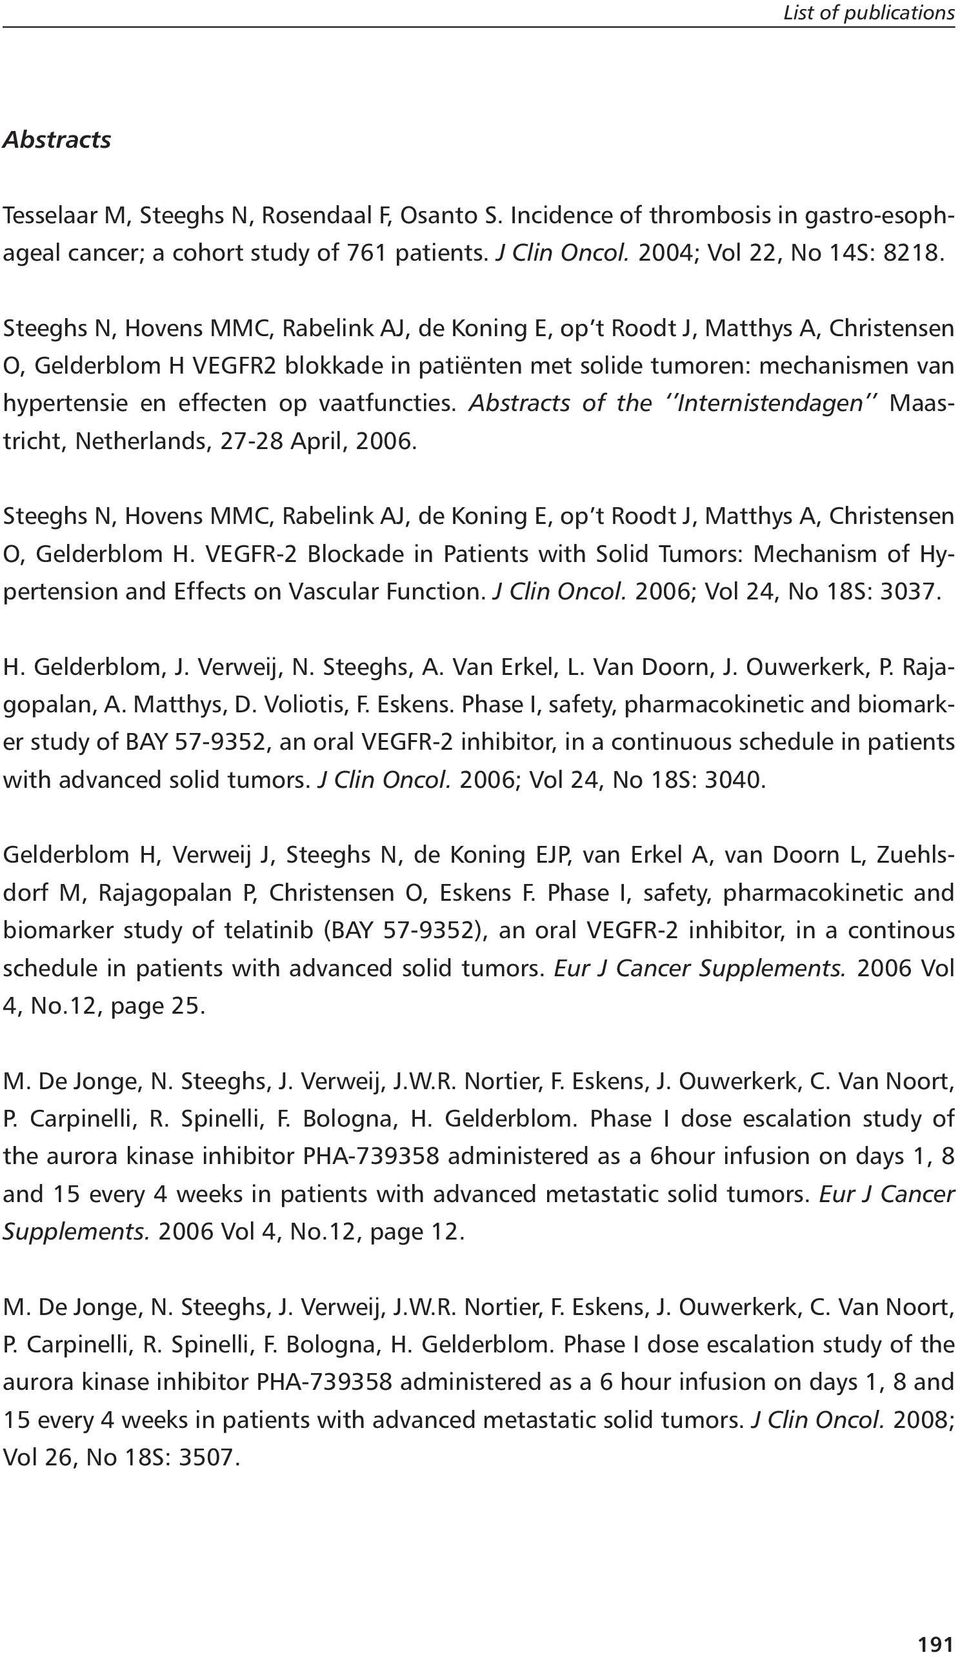 Steeghs N, Hovens MMC, Rabelink AJ, de Koning E, op t Roodt J, Matthys A, Christensen O, Gelderblom H VEGFR2 blokkade in patiënten met solide tumoren: mechanismen van hypertensie en effecten op